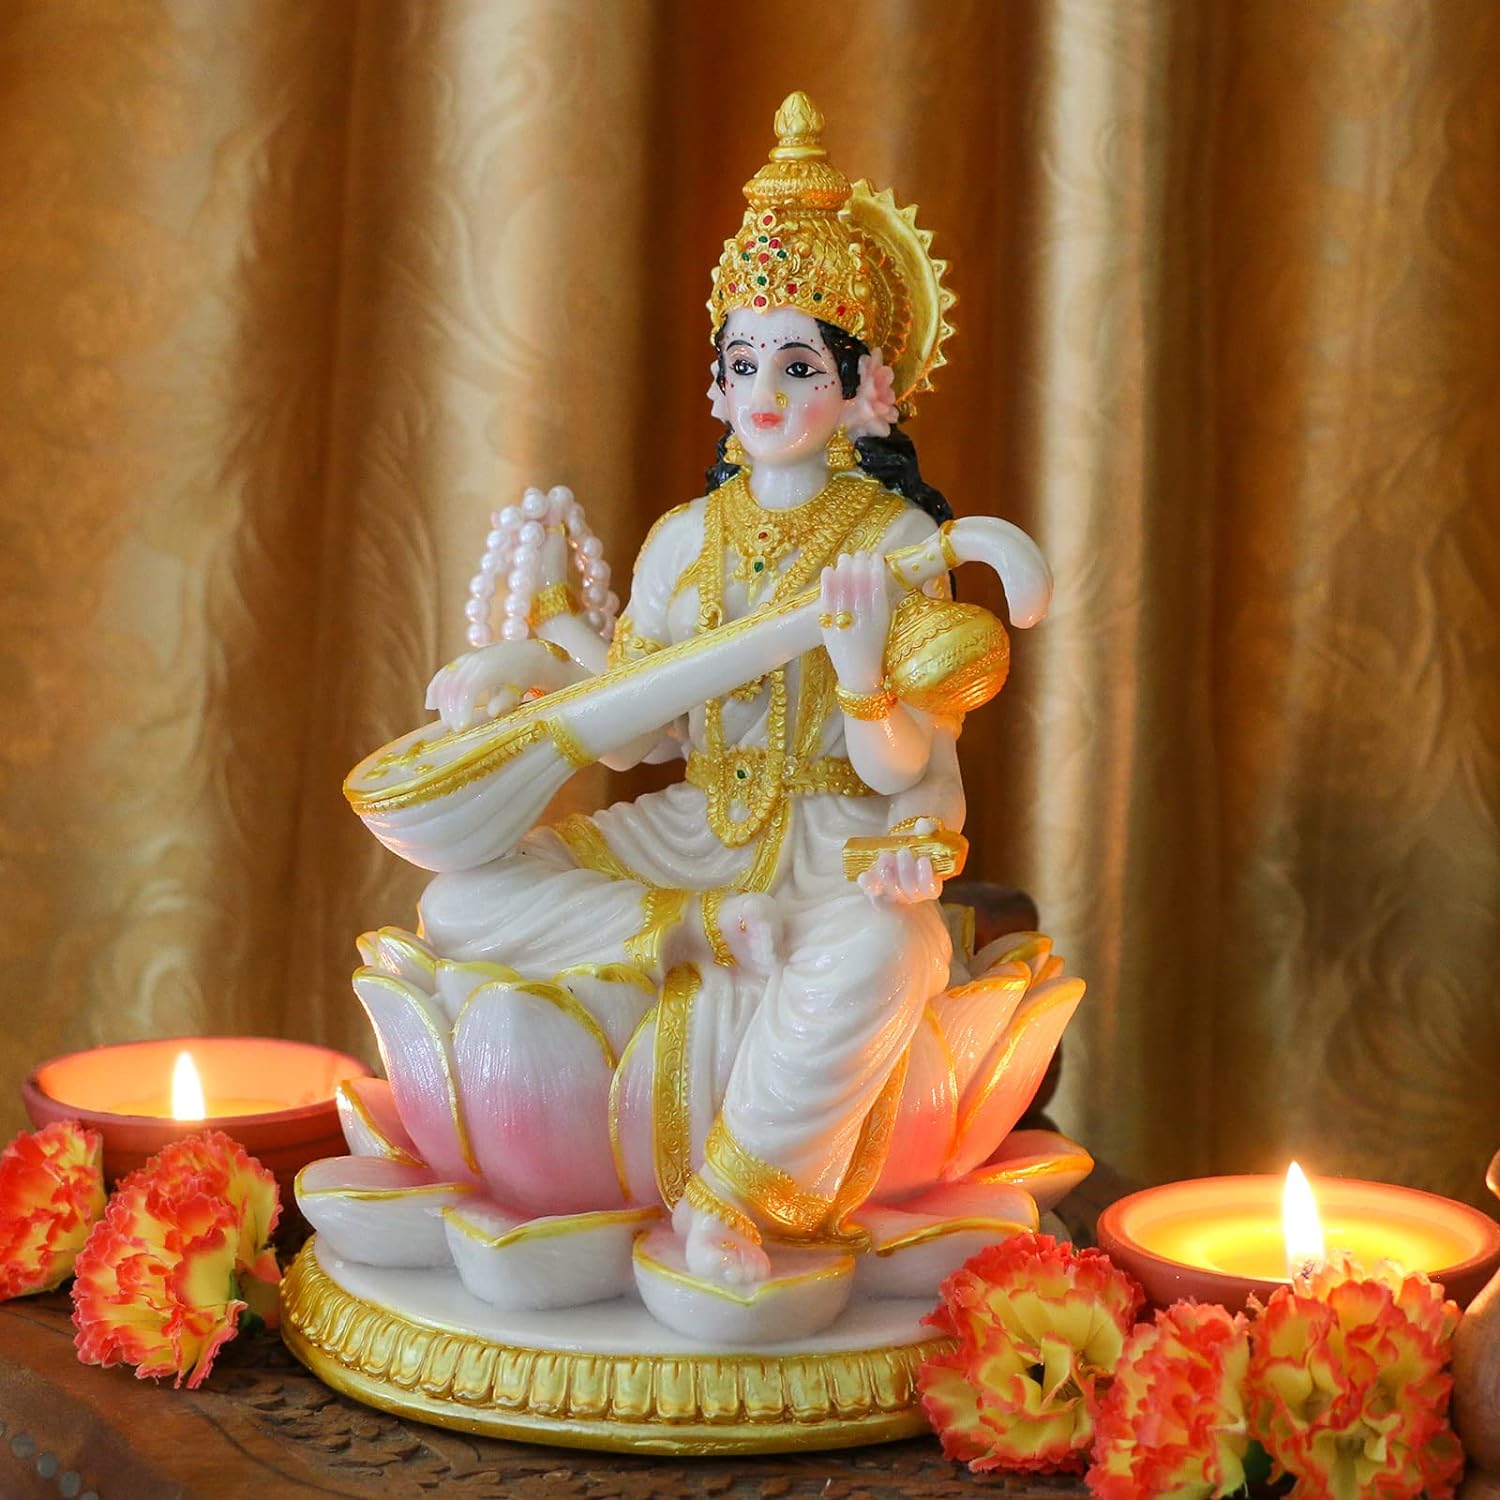 Big Hindu Goddess Saraswati Statue - 8.7”H Marble Look Indian Idol Saraswati Figurine India Diwali Murti Pooja Sculpture Home Office Temple Mandir Puja Item Altar Shrine Spiritual Decor